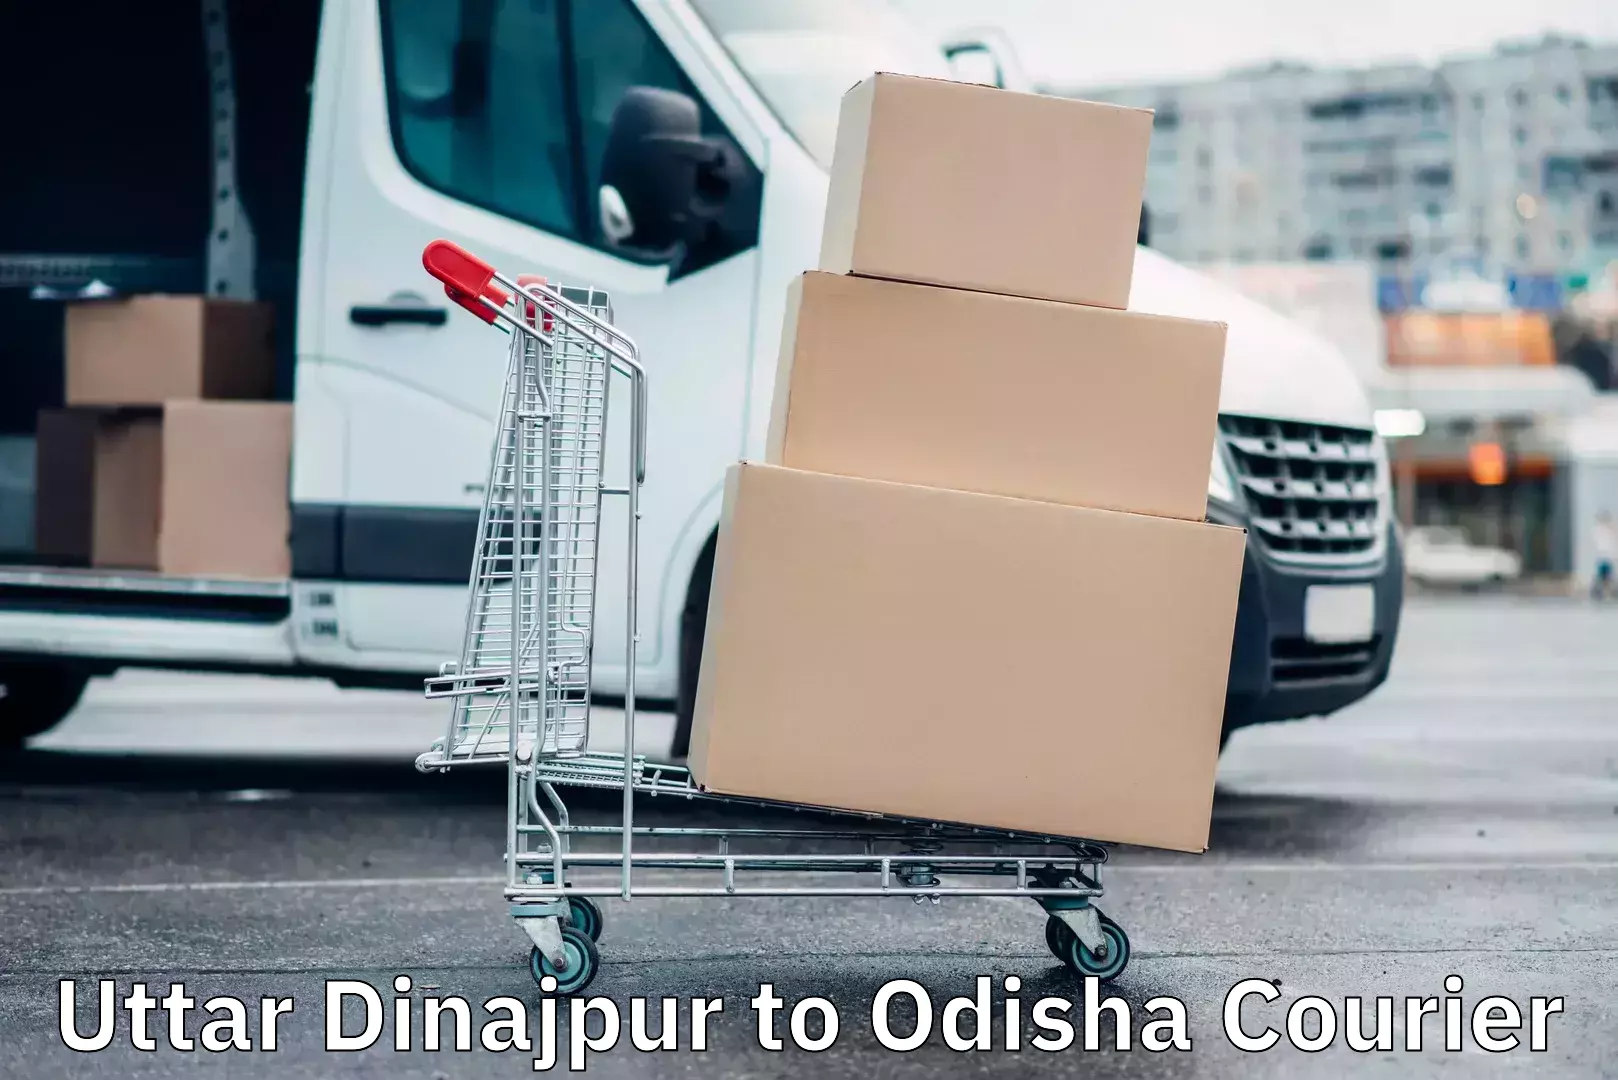 Express mail service Uttar Dinajpur to Odisha